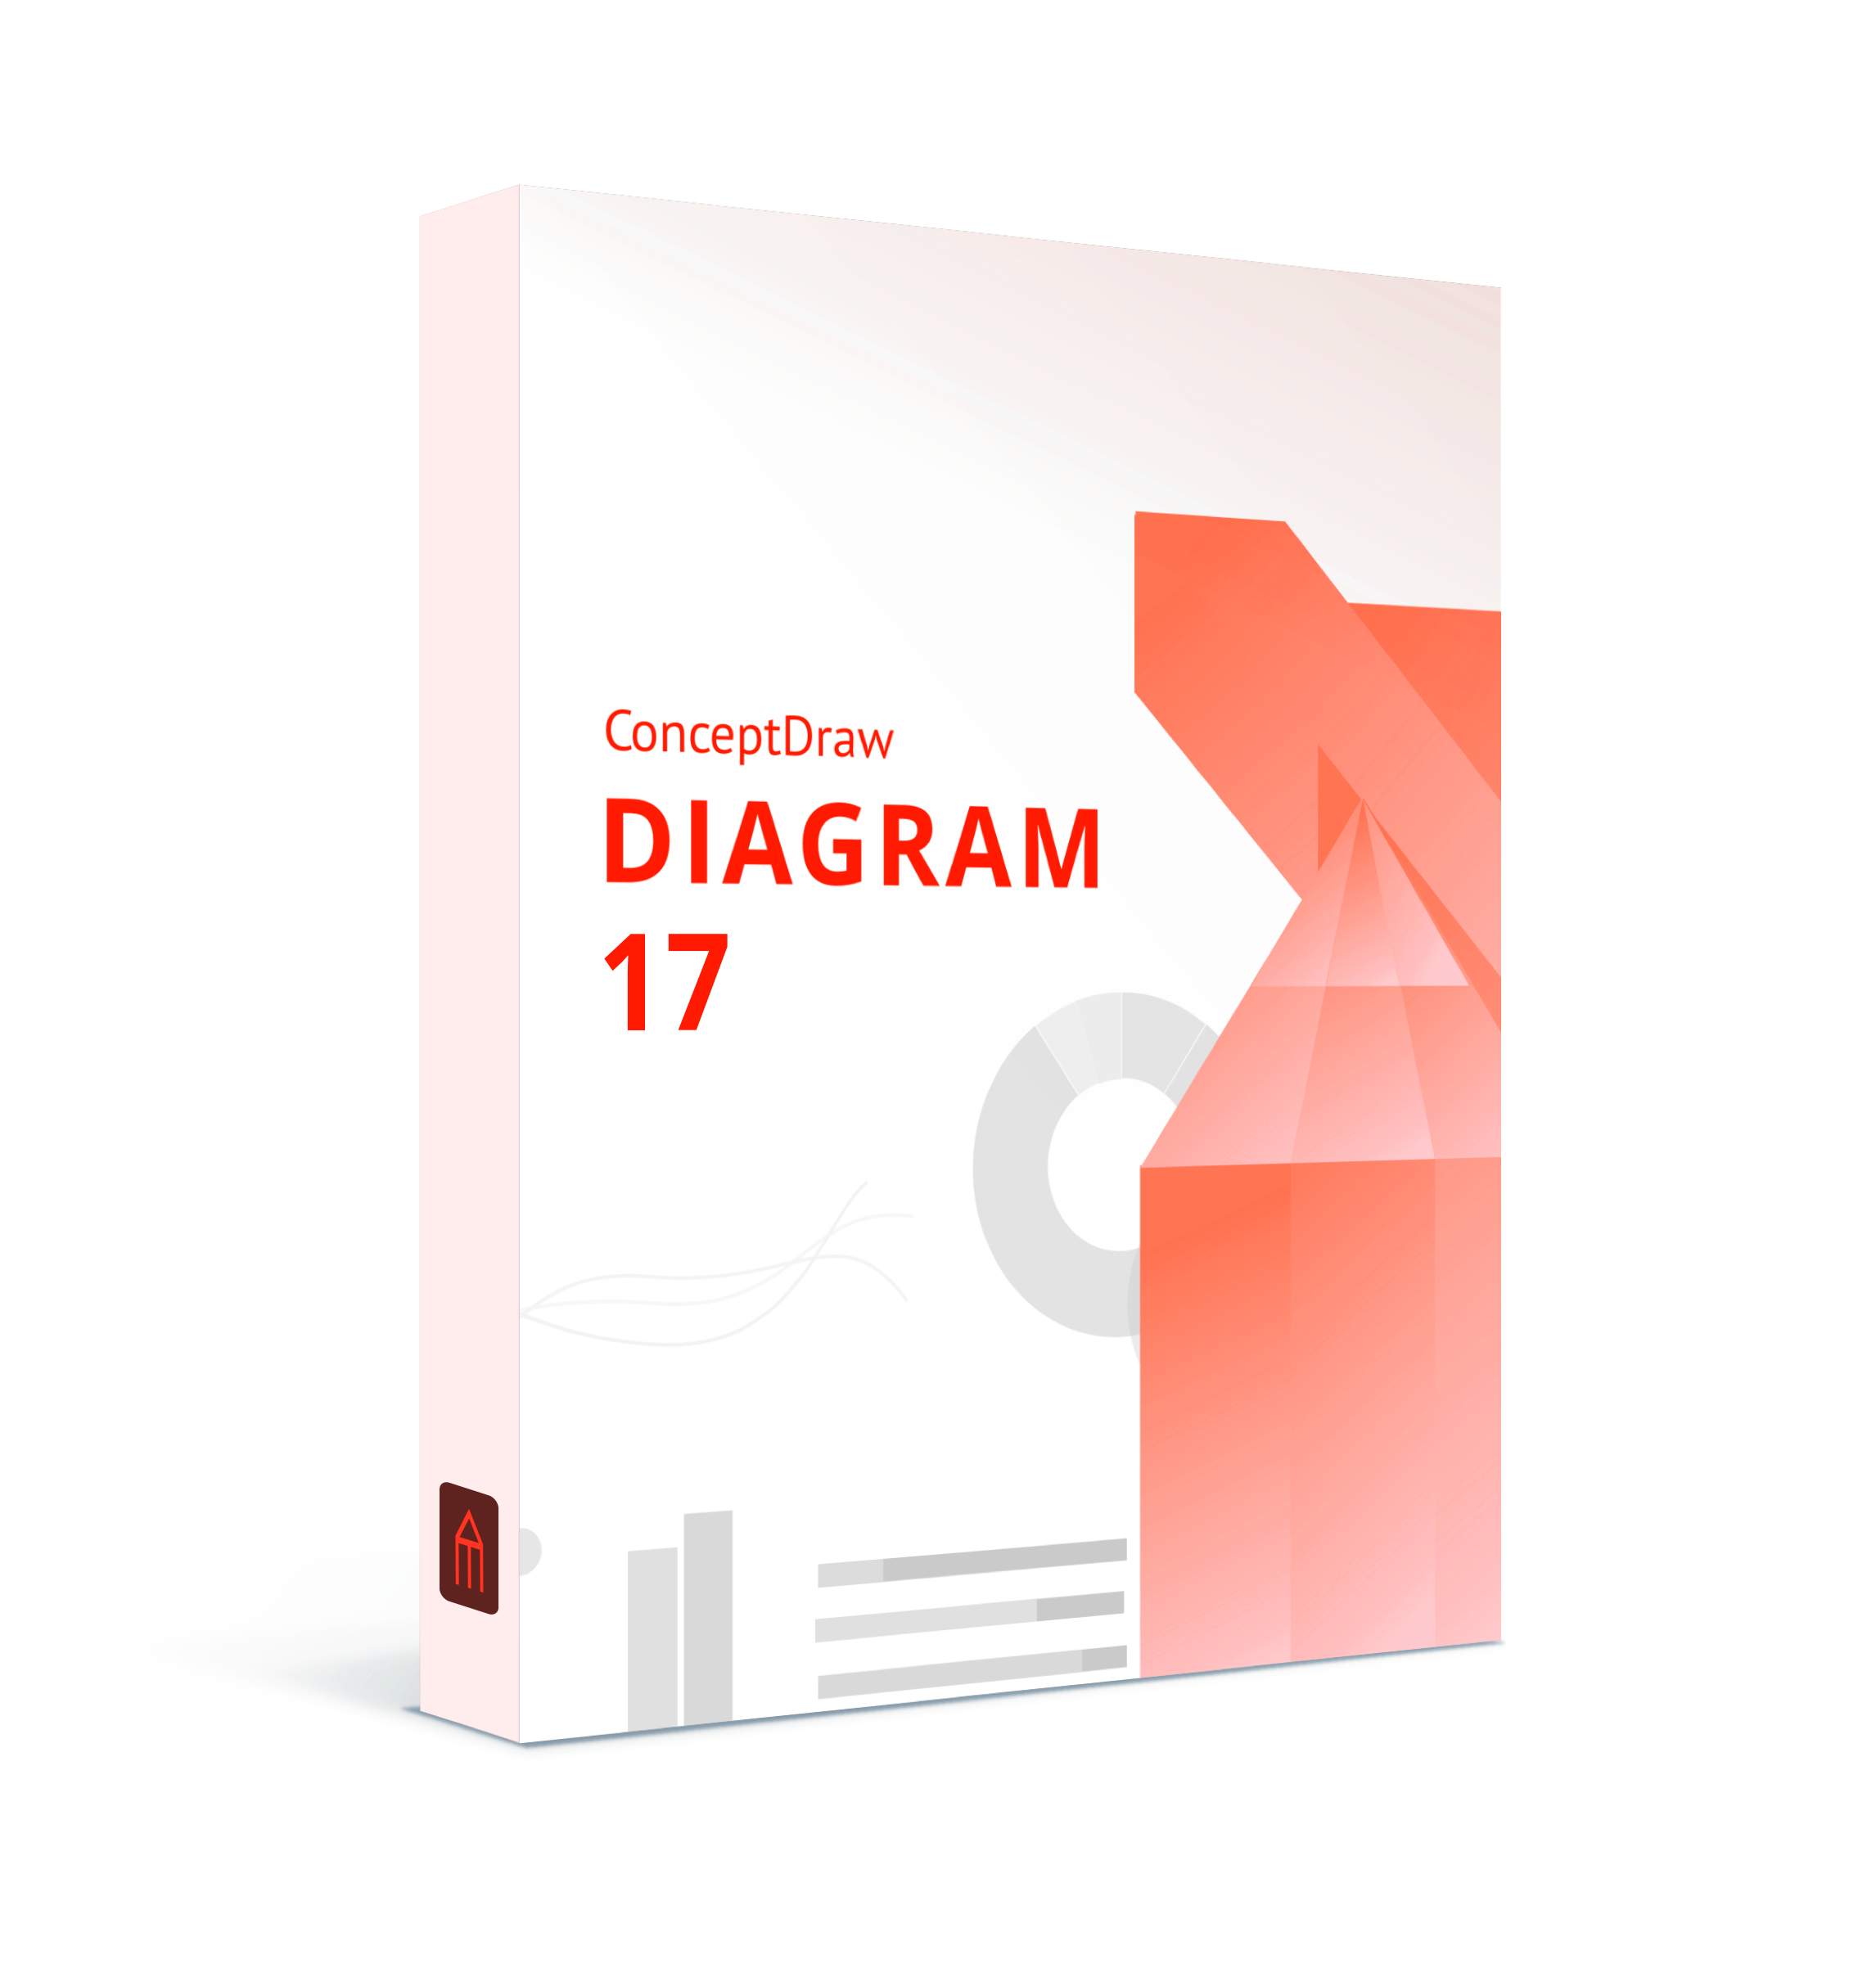 ConceptDraw DIAGRAM box image